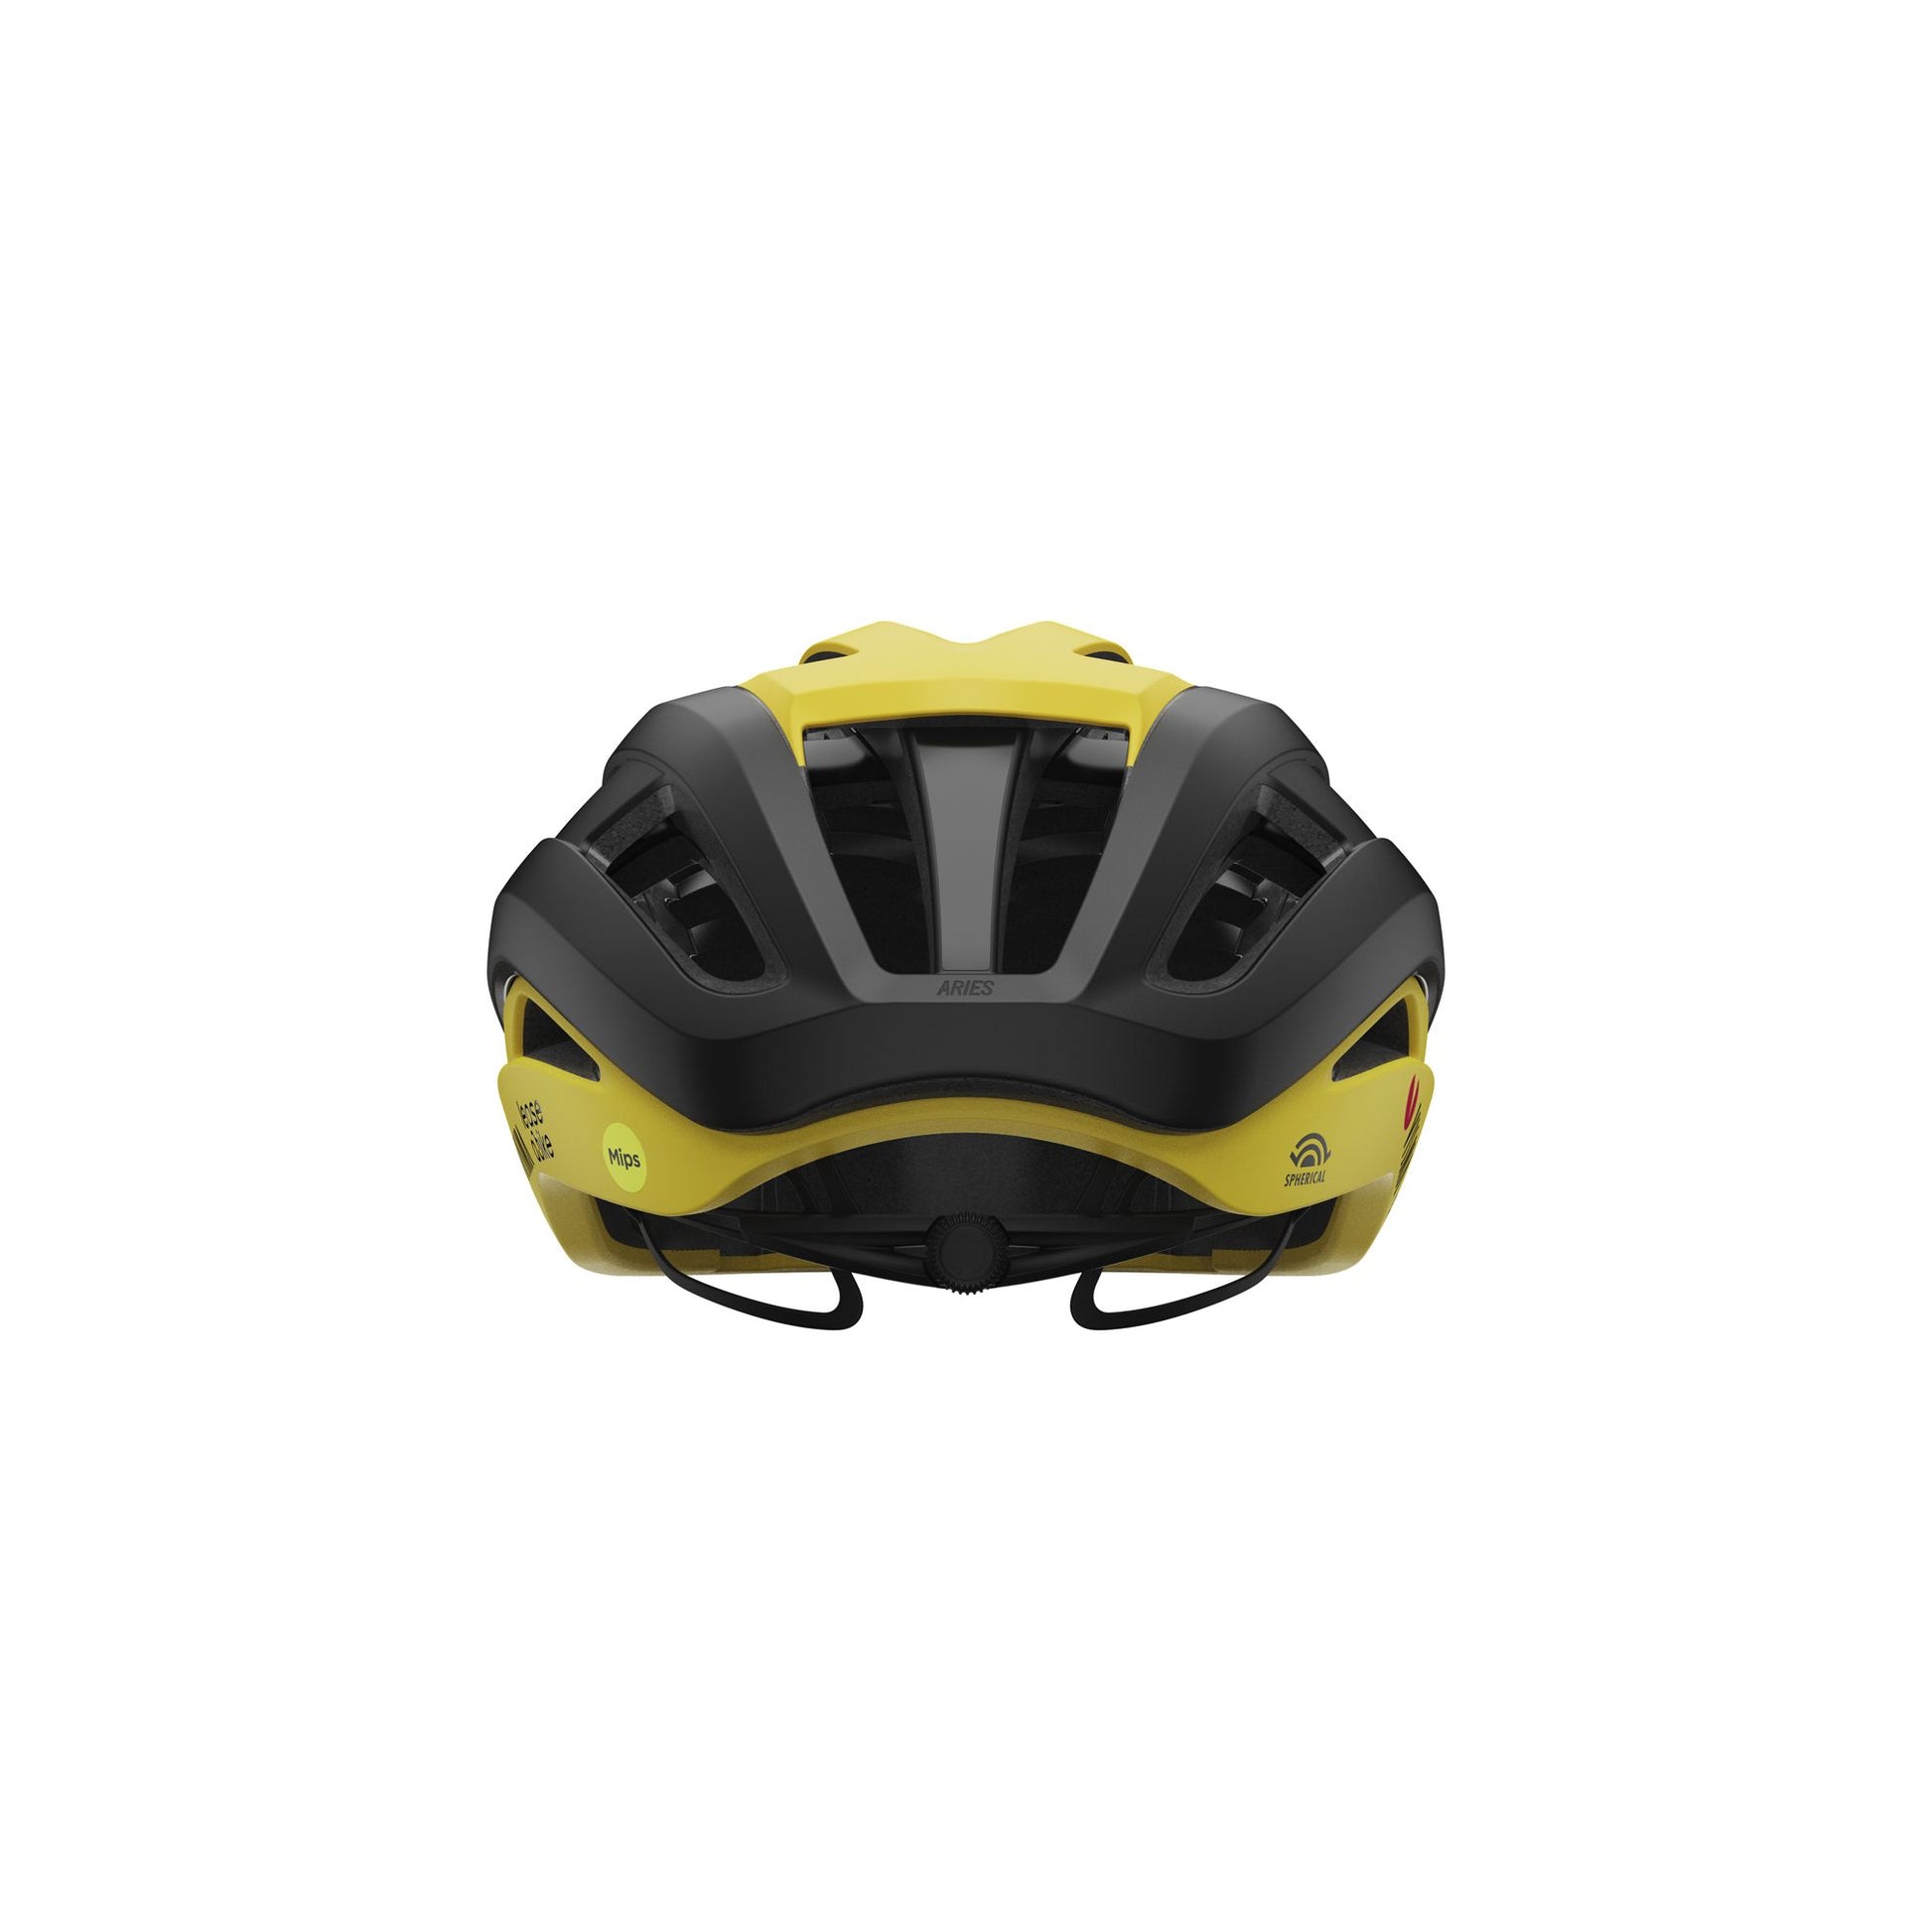 Giro Aries Spherical MIPS Helmet LTD Visma Team - Giro Bike Bike Helmets